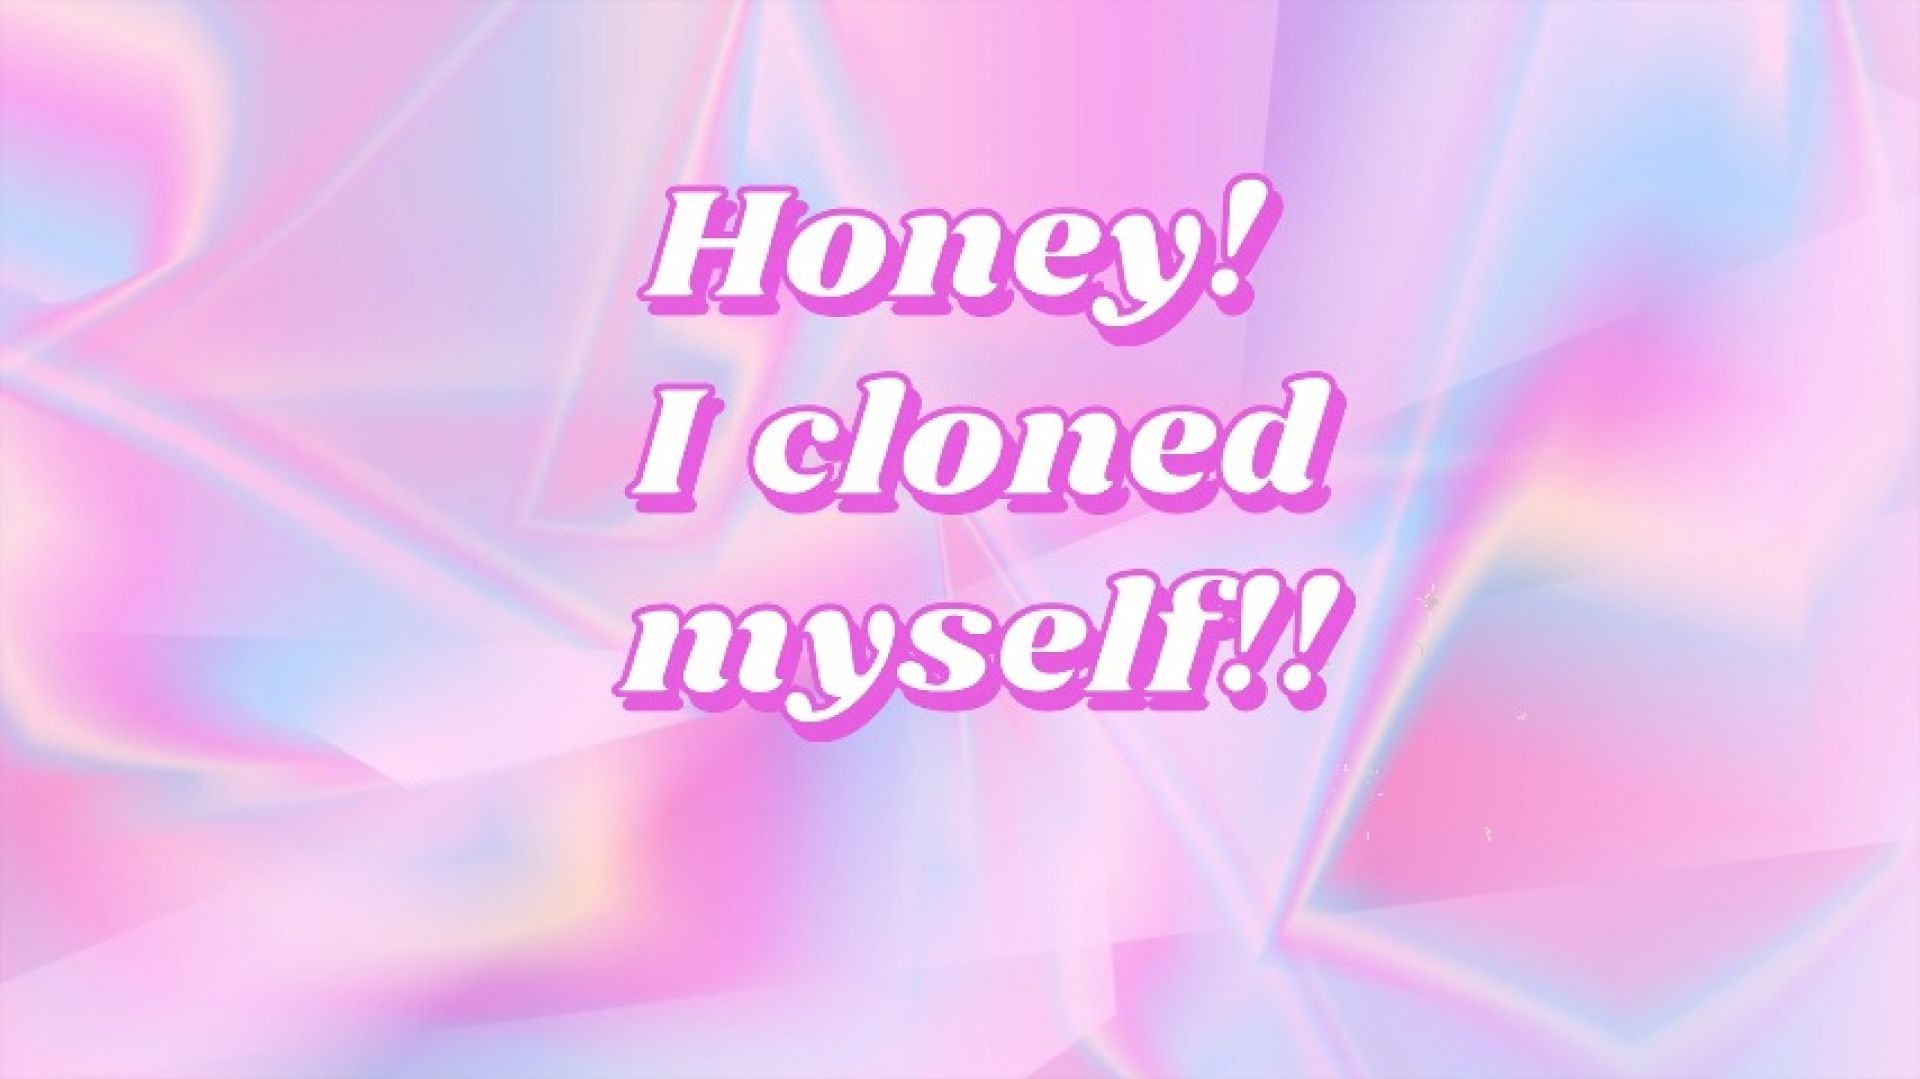 Honey! I cloned myself